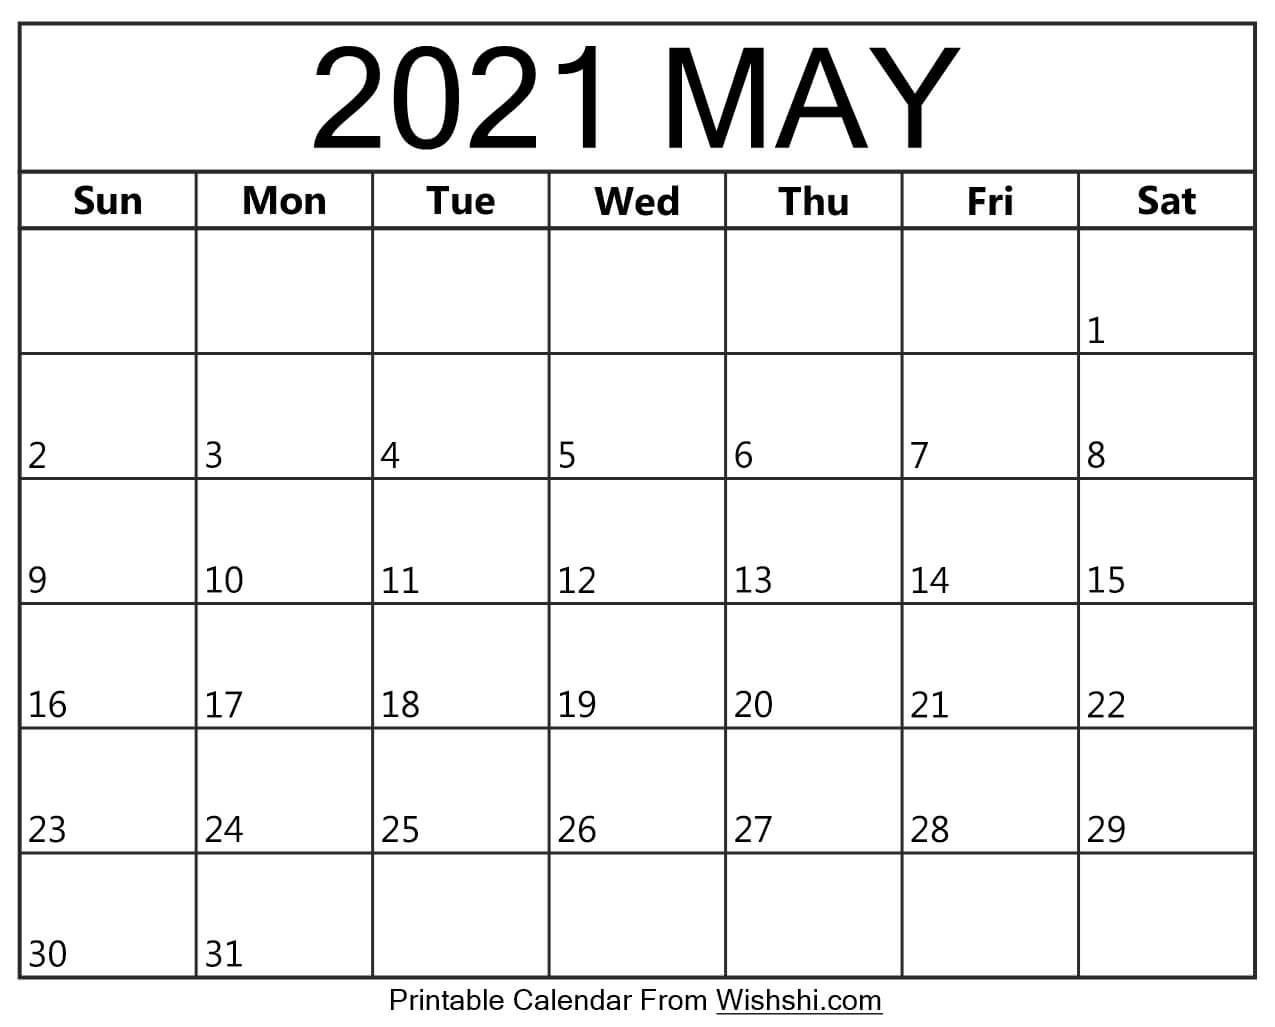 May 2021 Calendar Printable Free Printable Calendars May